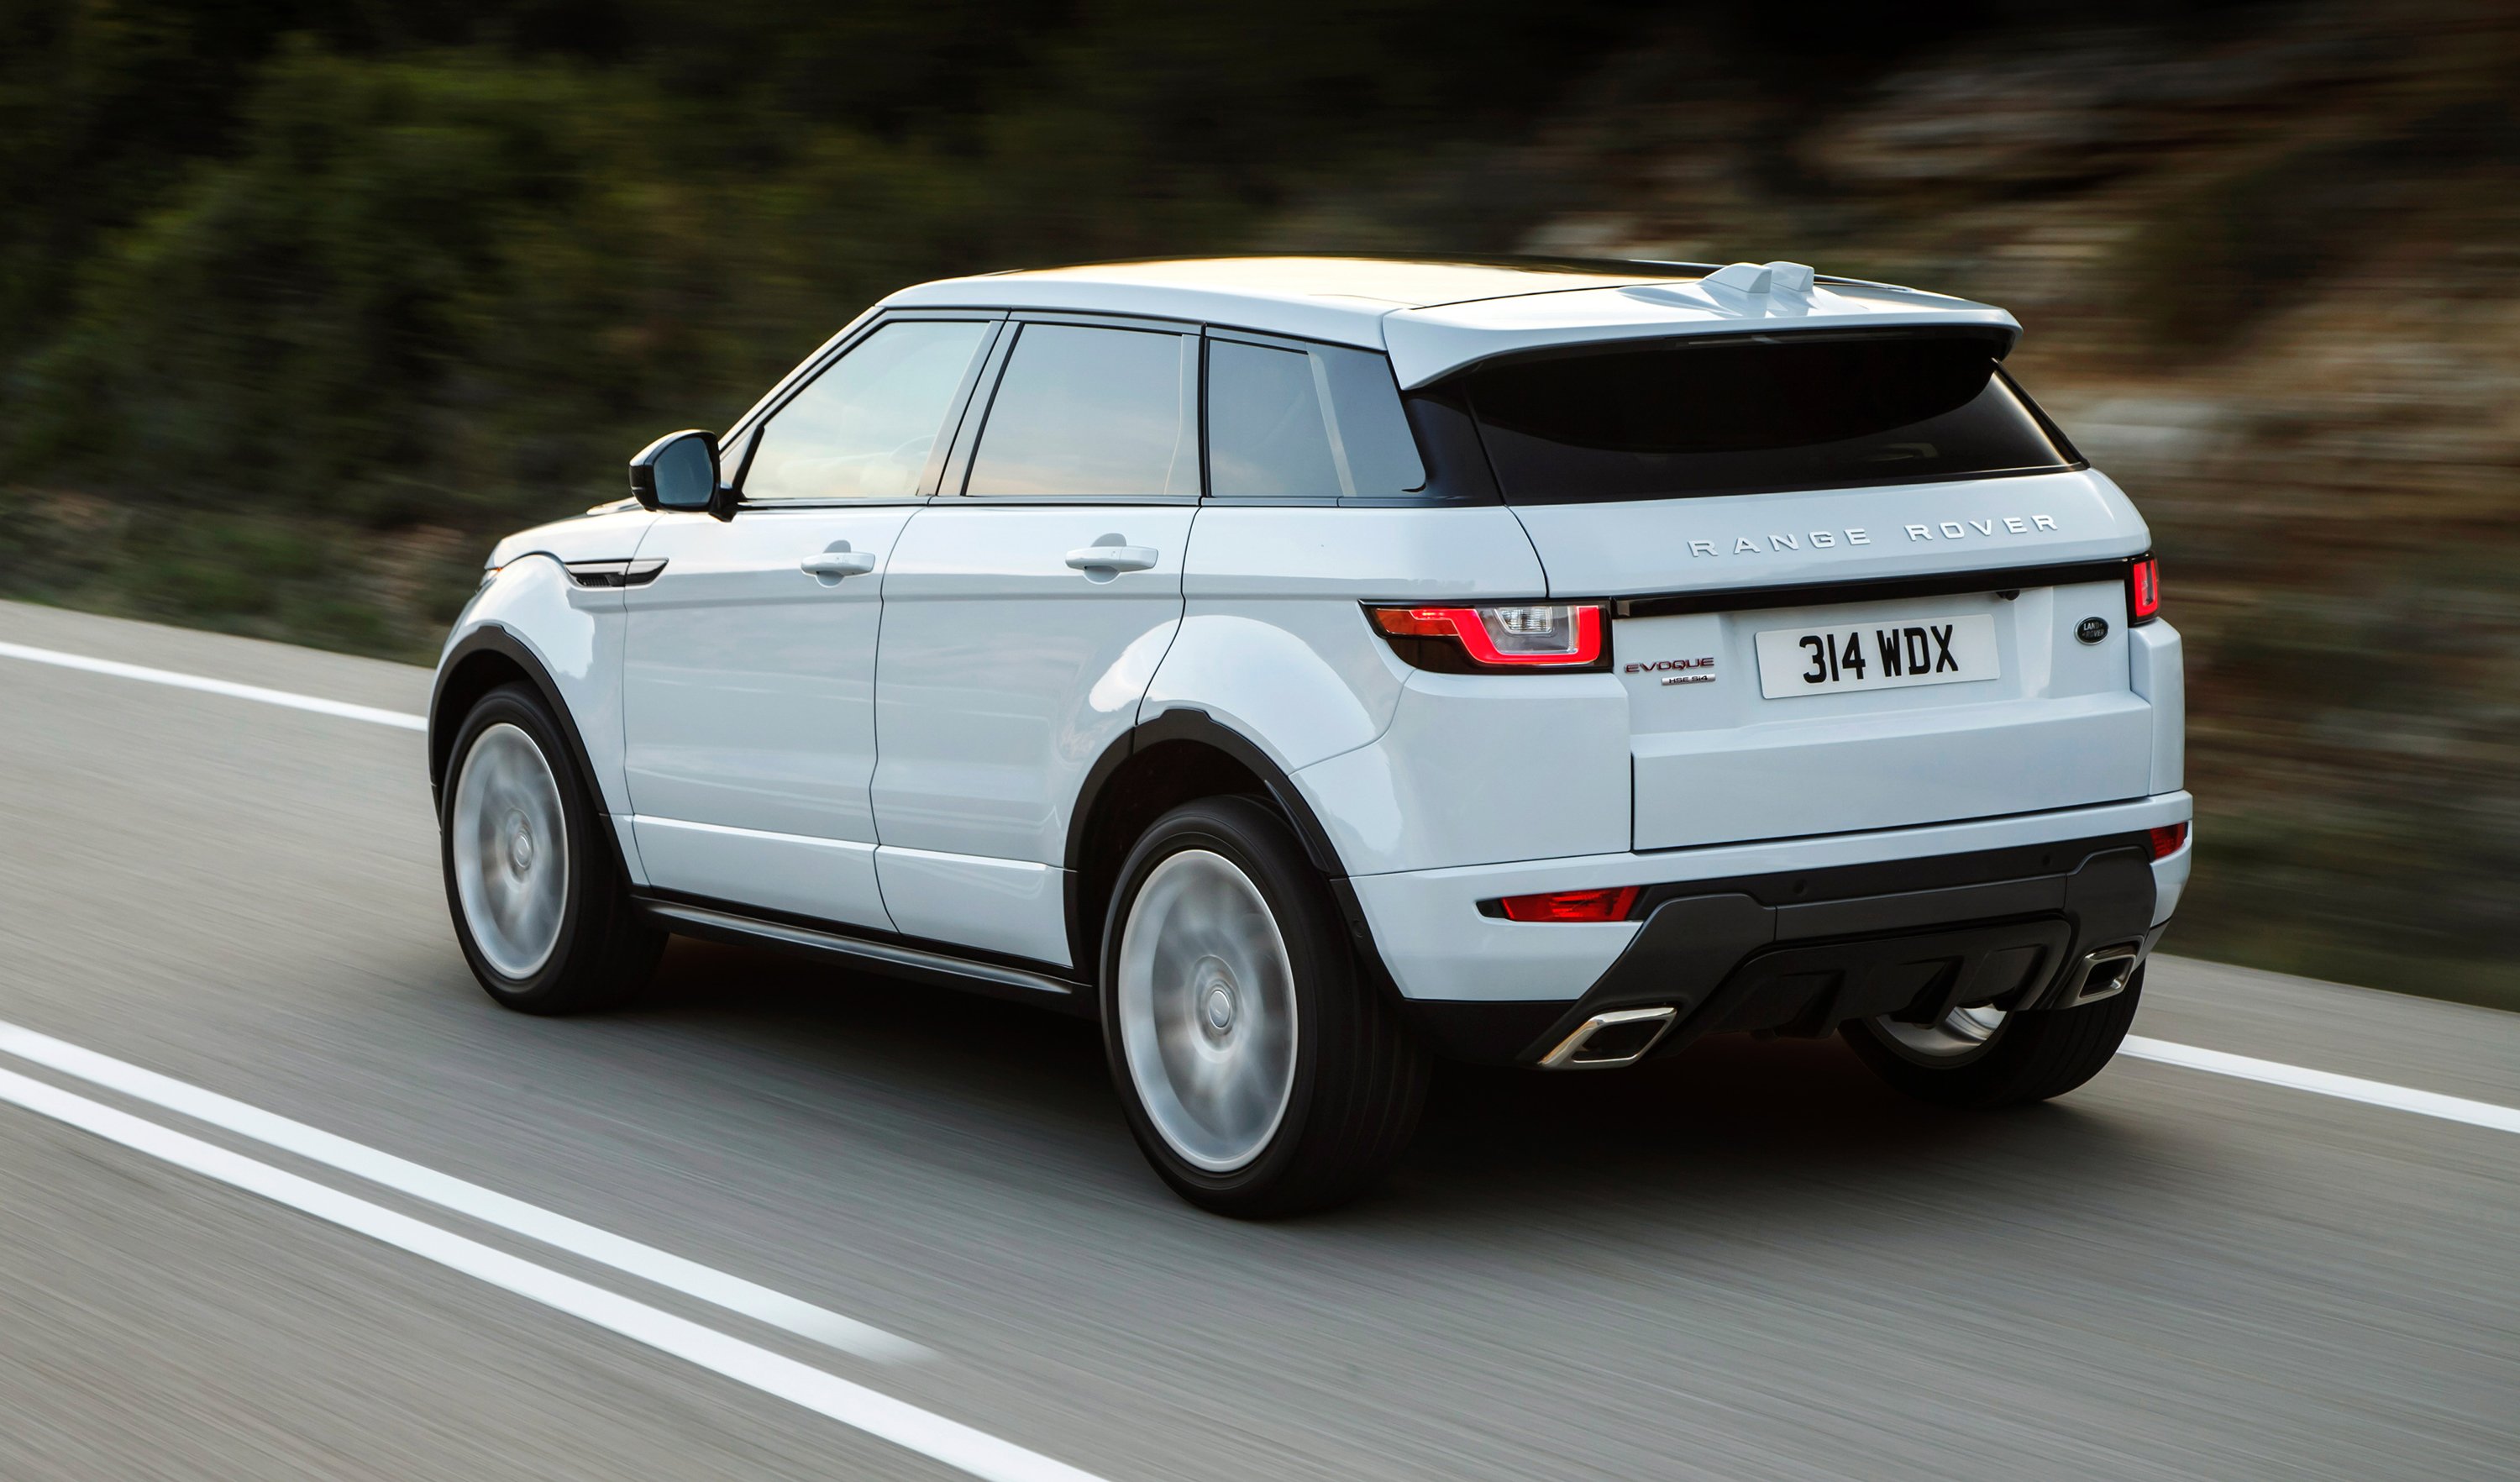 2018 Range Rover Evoque, Land Rover Discovery Sport